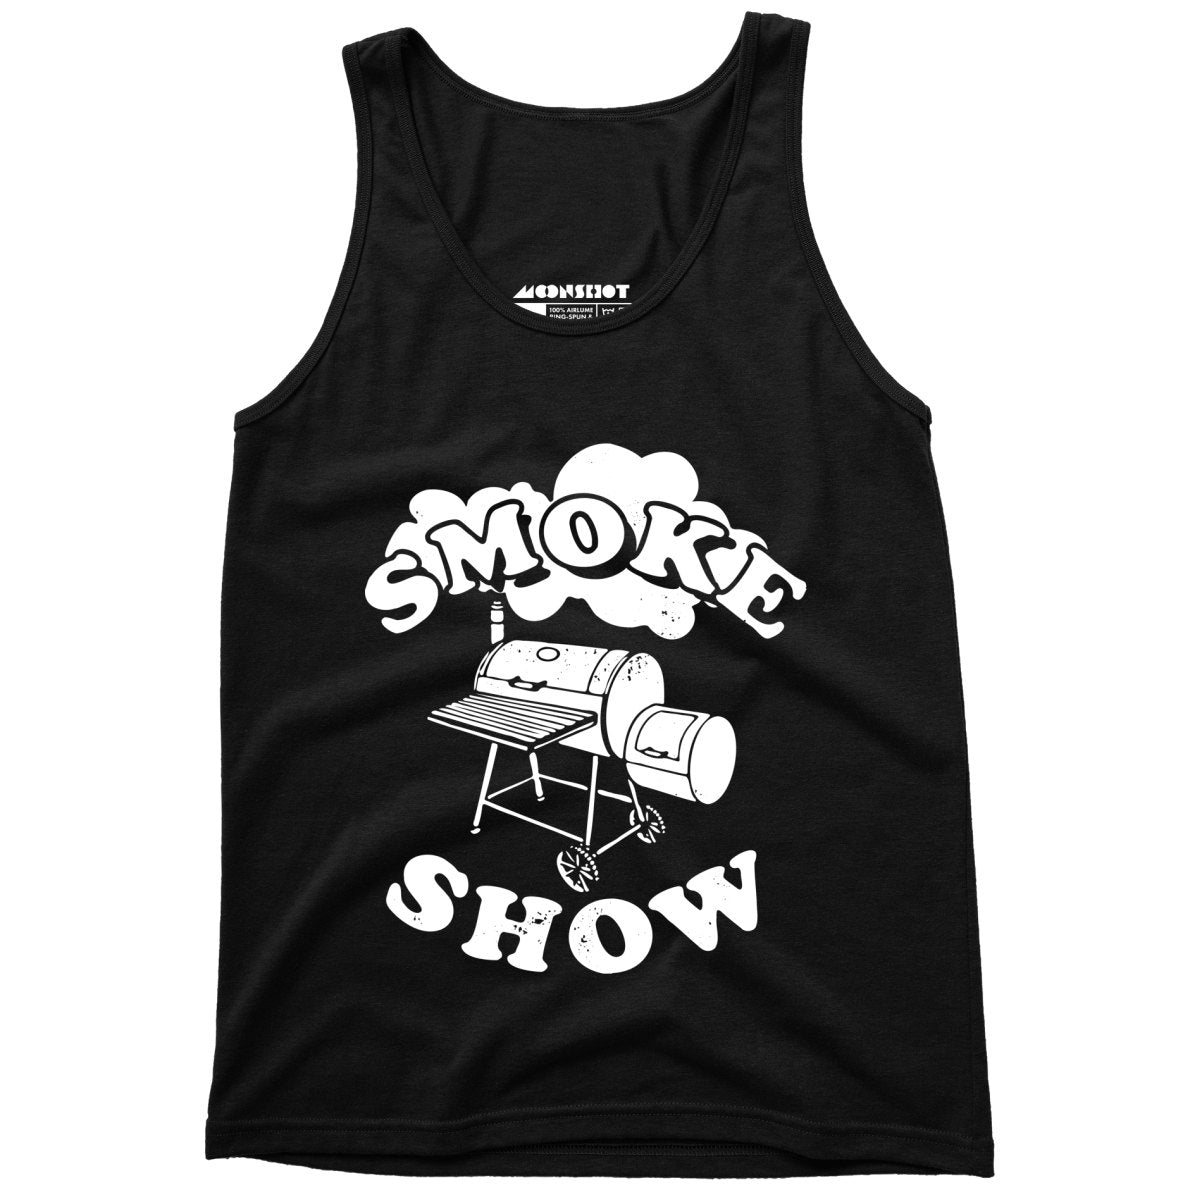 Smoke Show - Unisex Tank Top